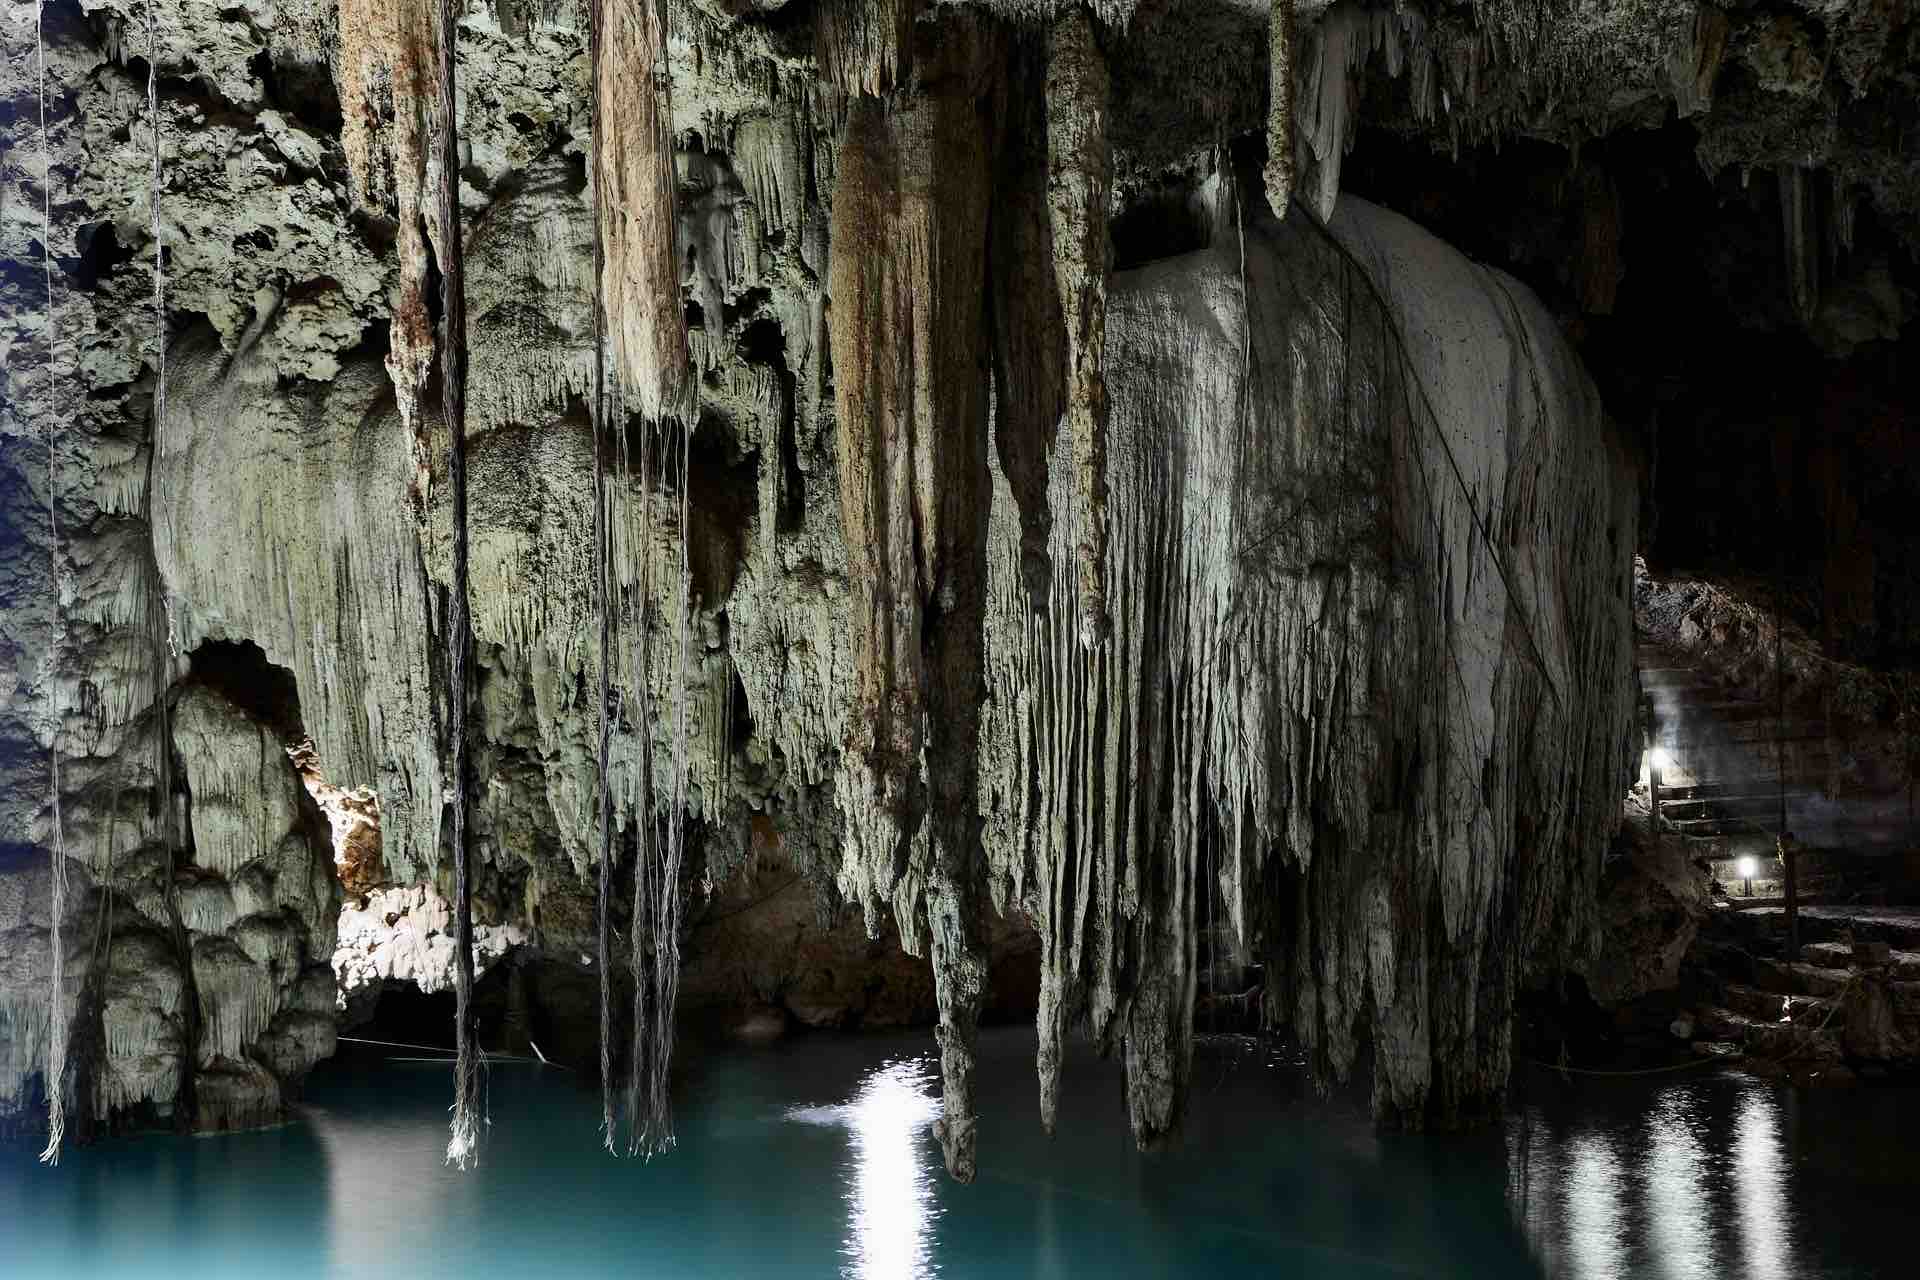 Cenote Riviera Maya Mexico Cancun Tulum Playa del carmen cenote tour stalactites